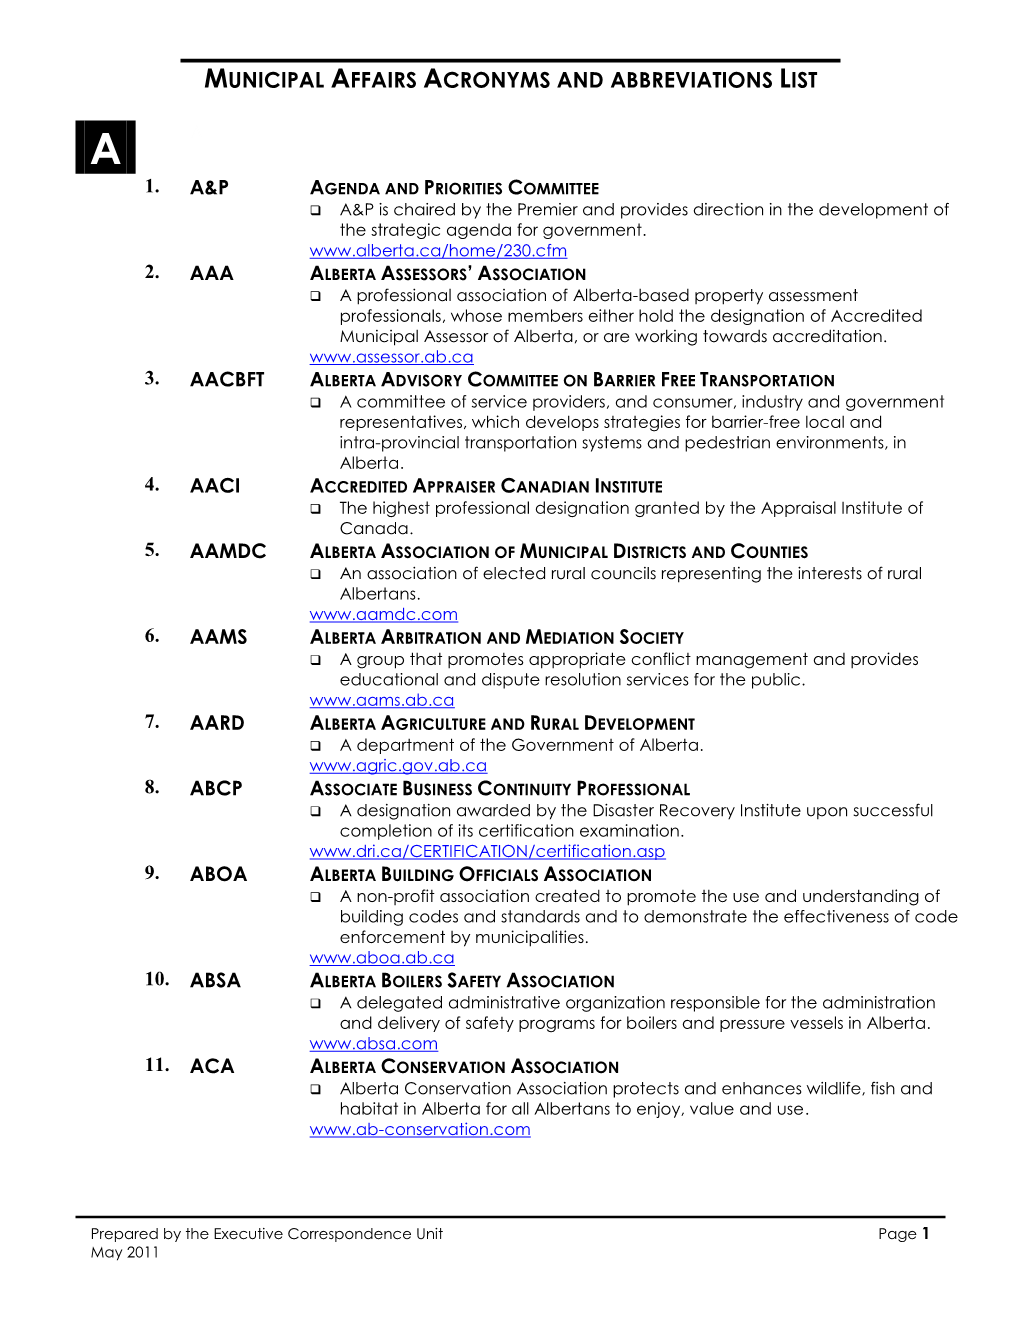 Municipal Affairs Acronyms and Abbreviations List